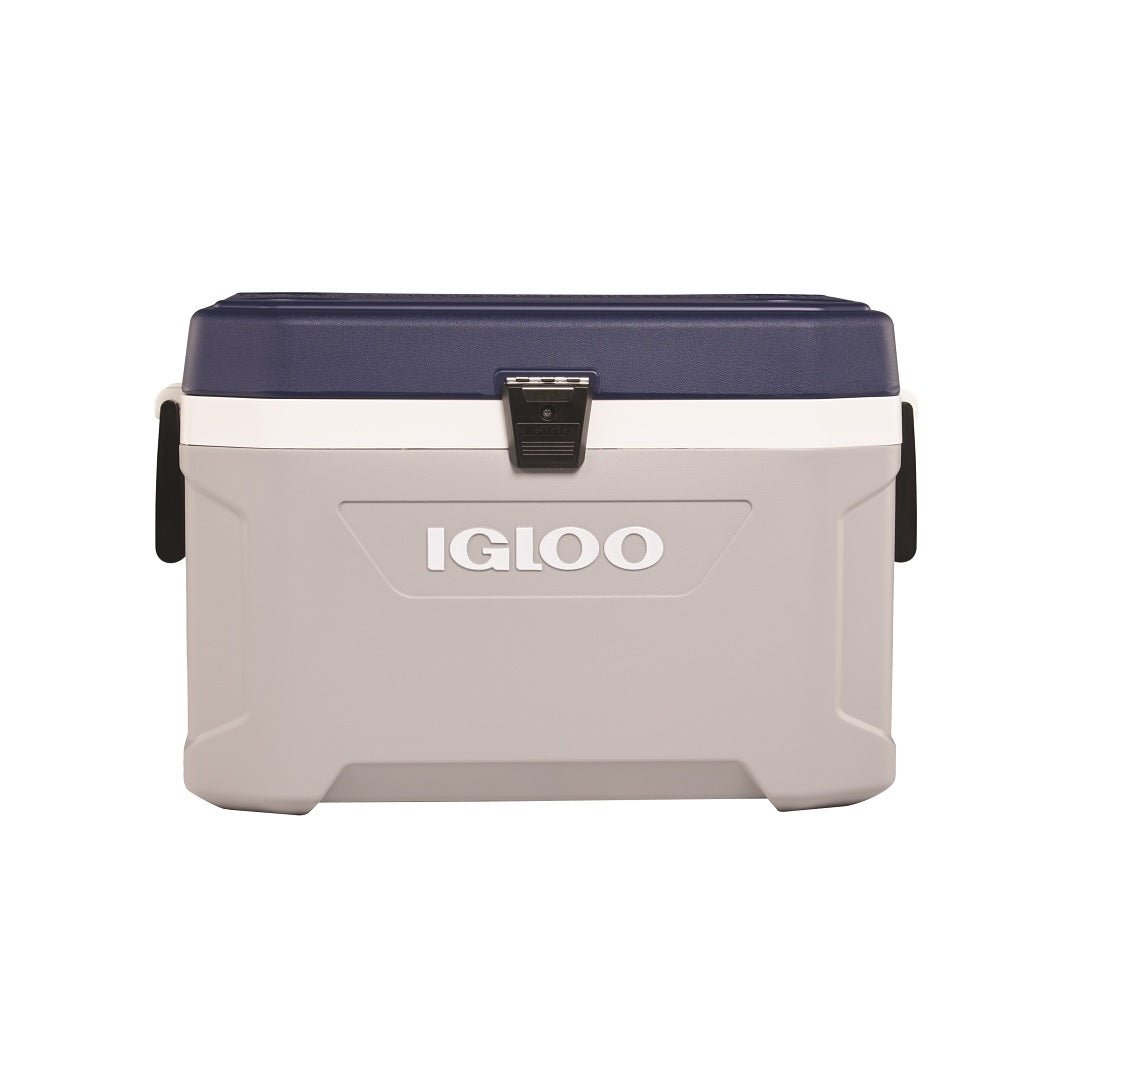 Igloo 50549 Cooler, Ash Gray/Aegean Sea, 70 quart